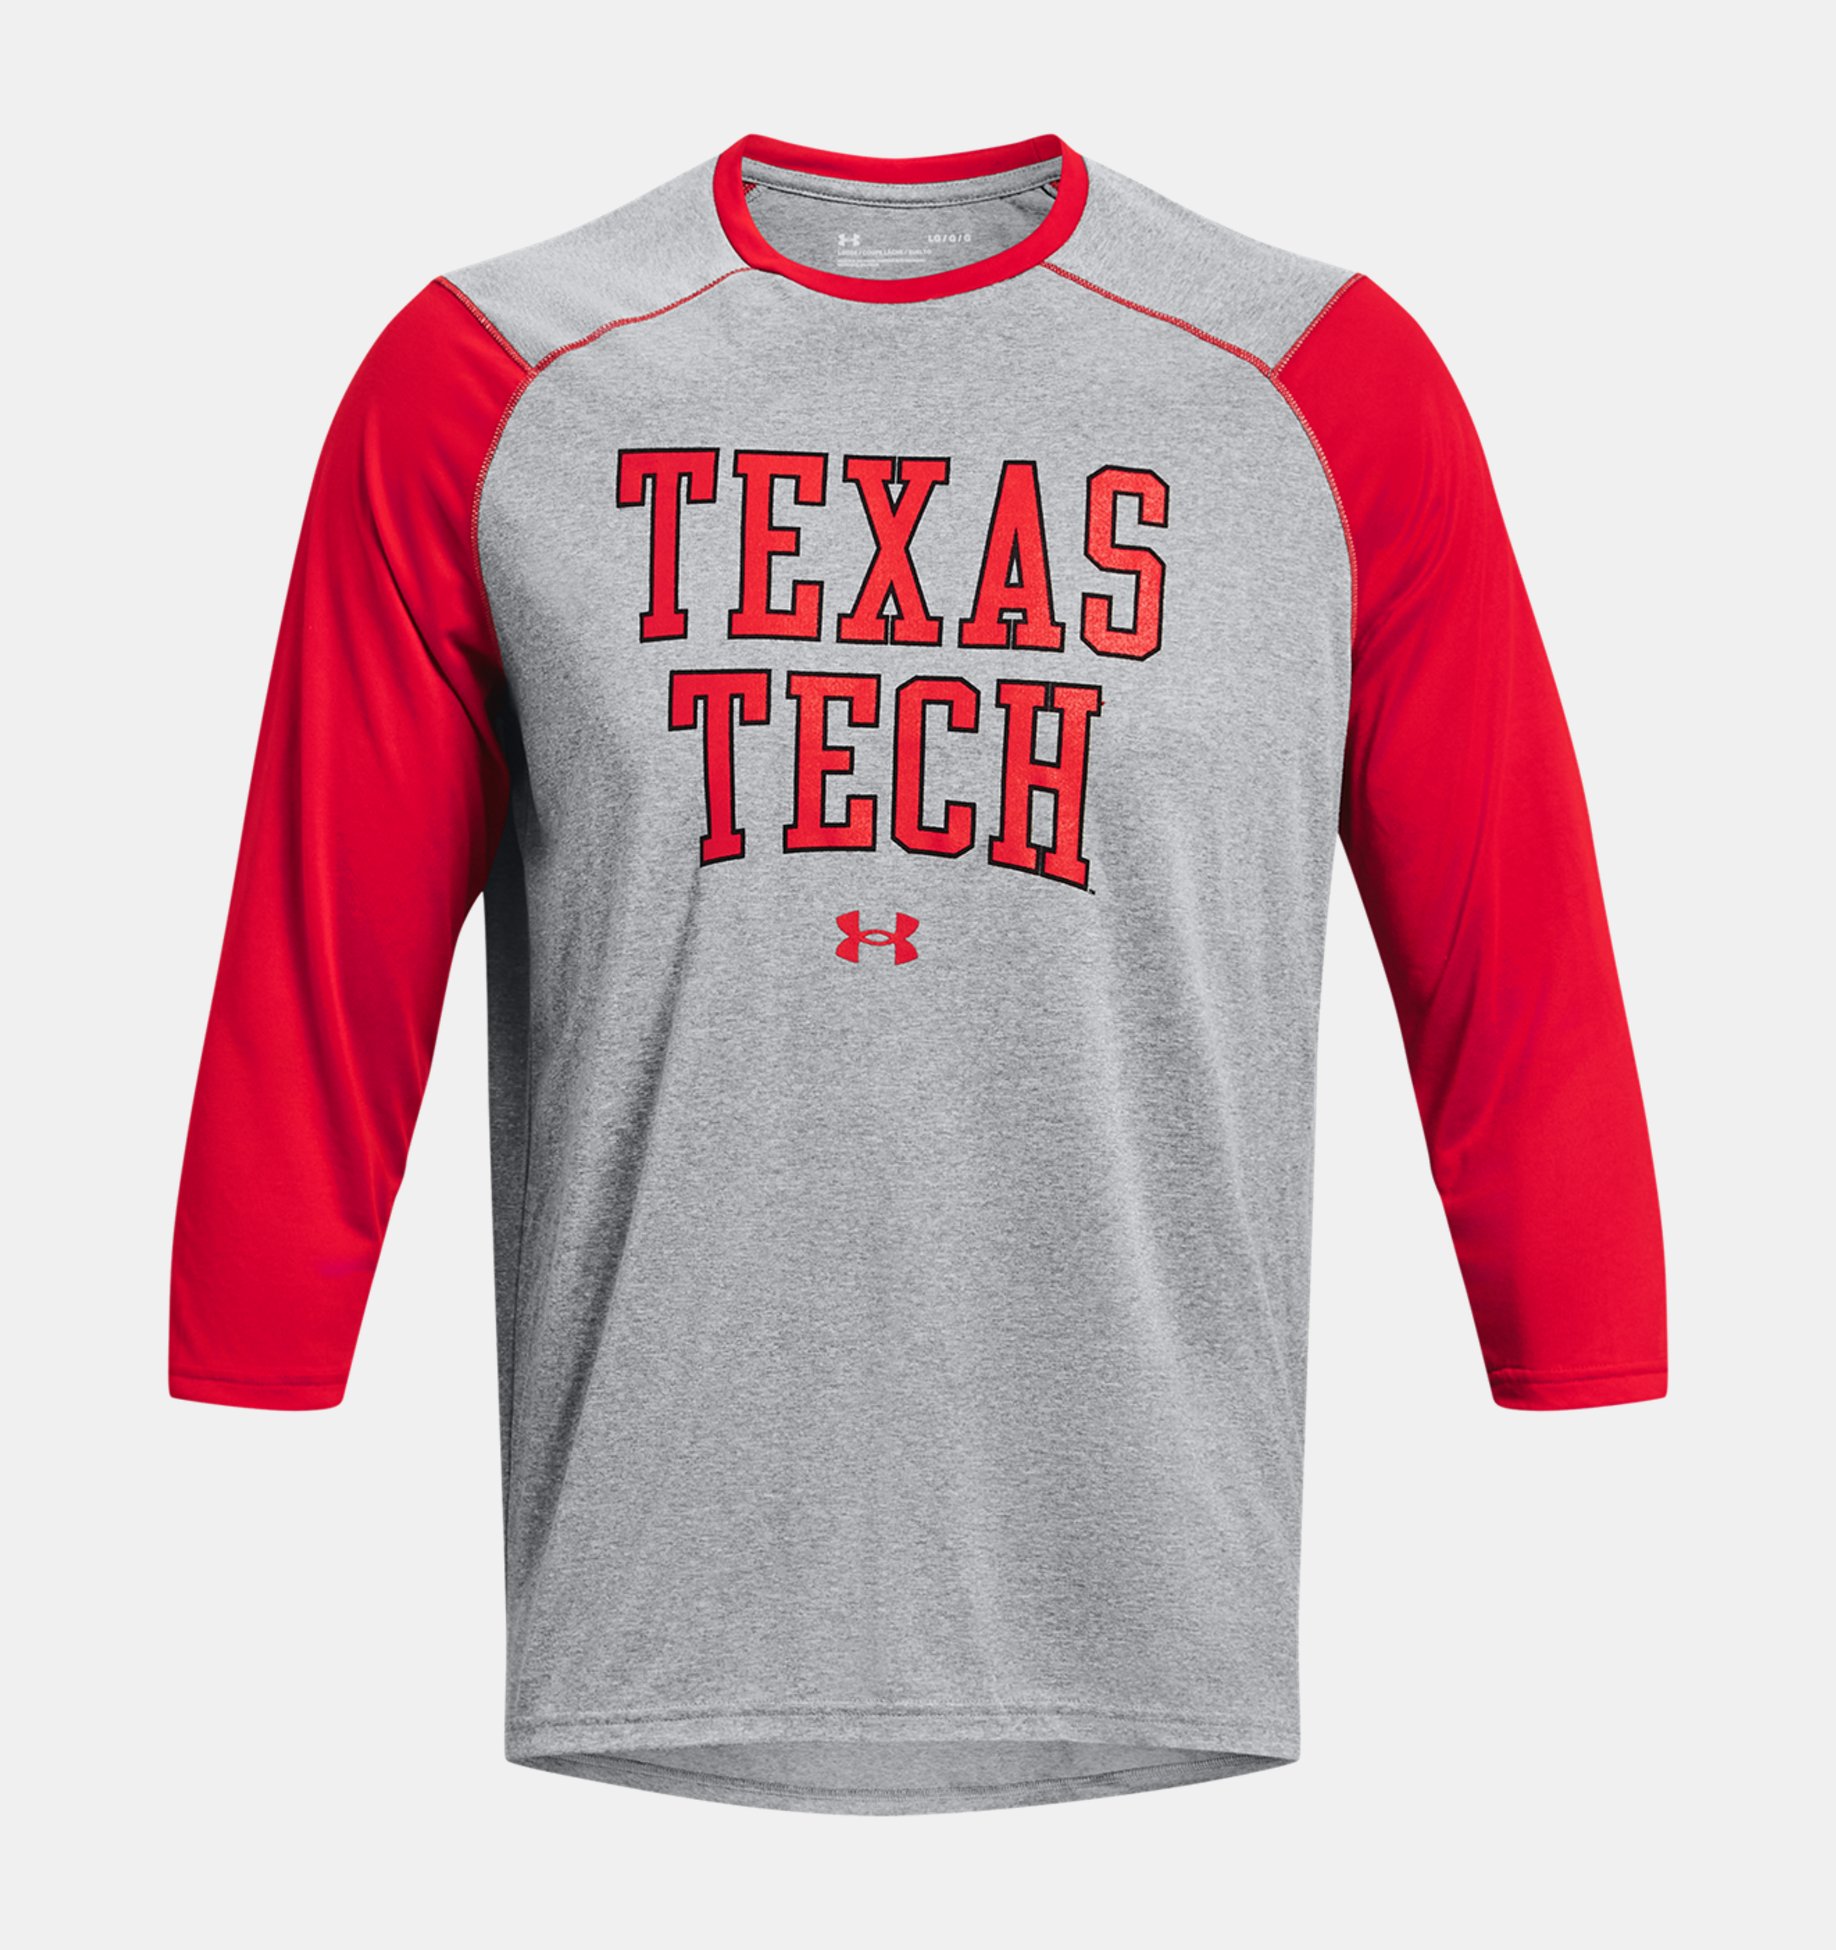 Underarmour Mens UA Tech Collegiate Baseball T-Shirt